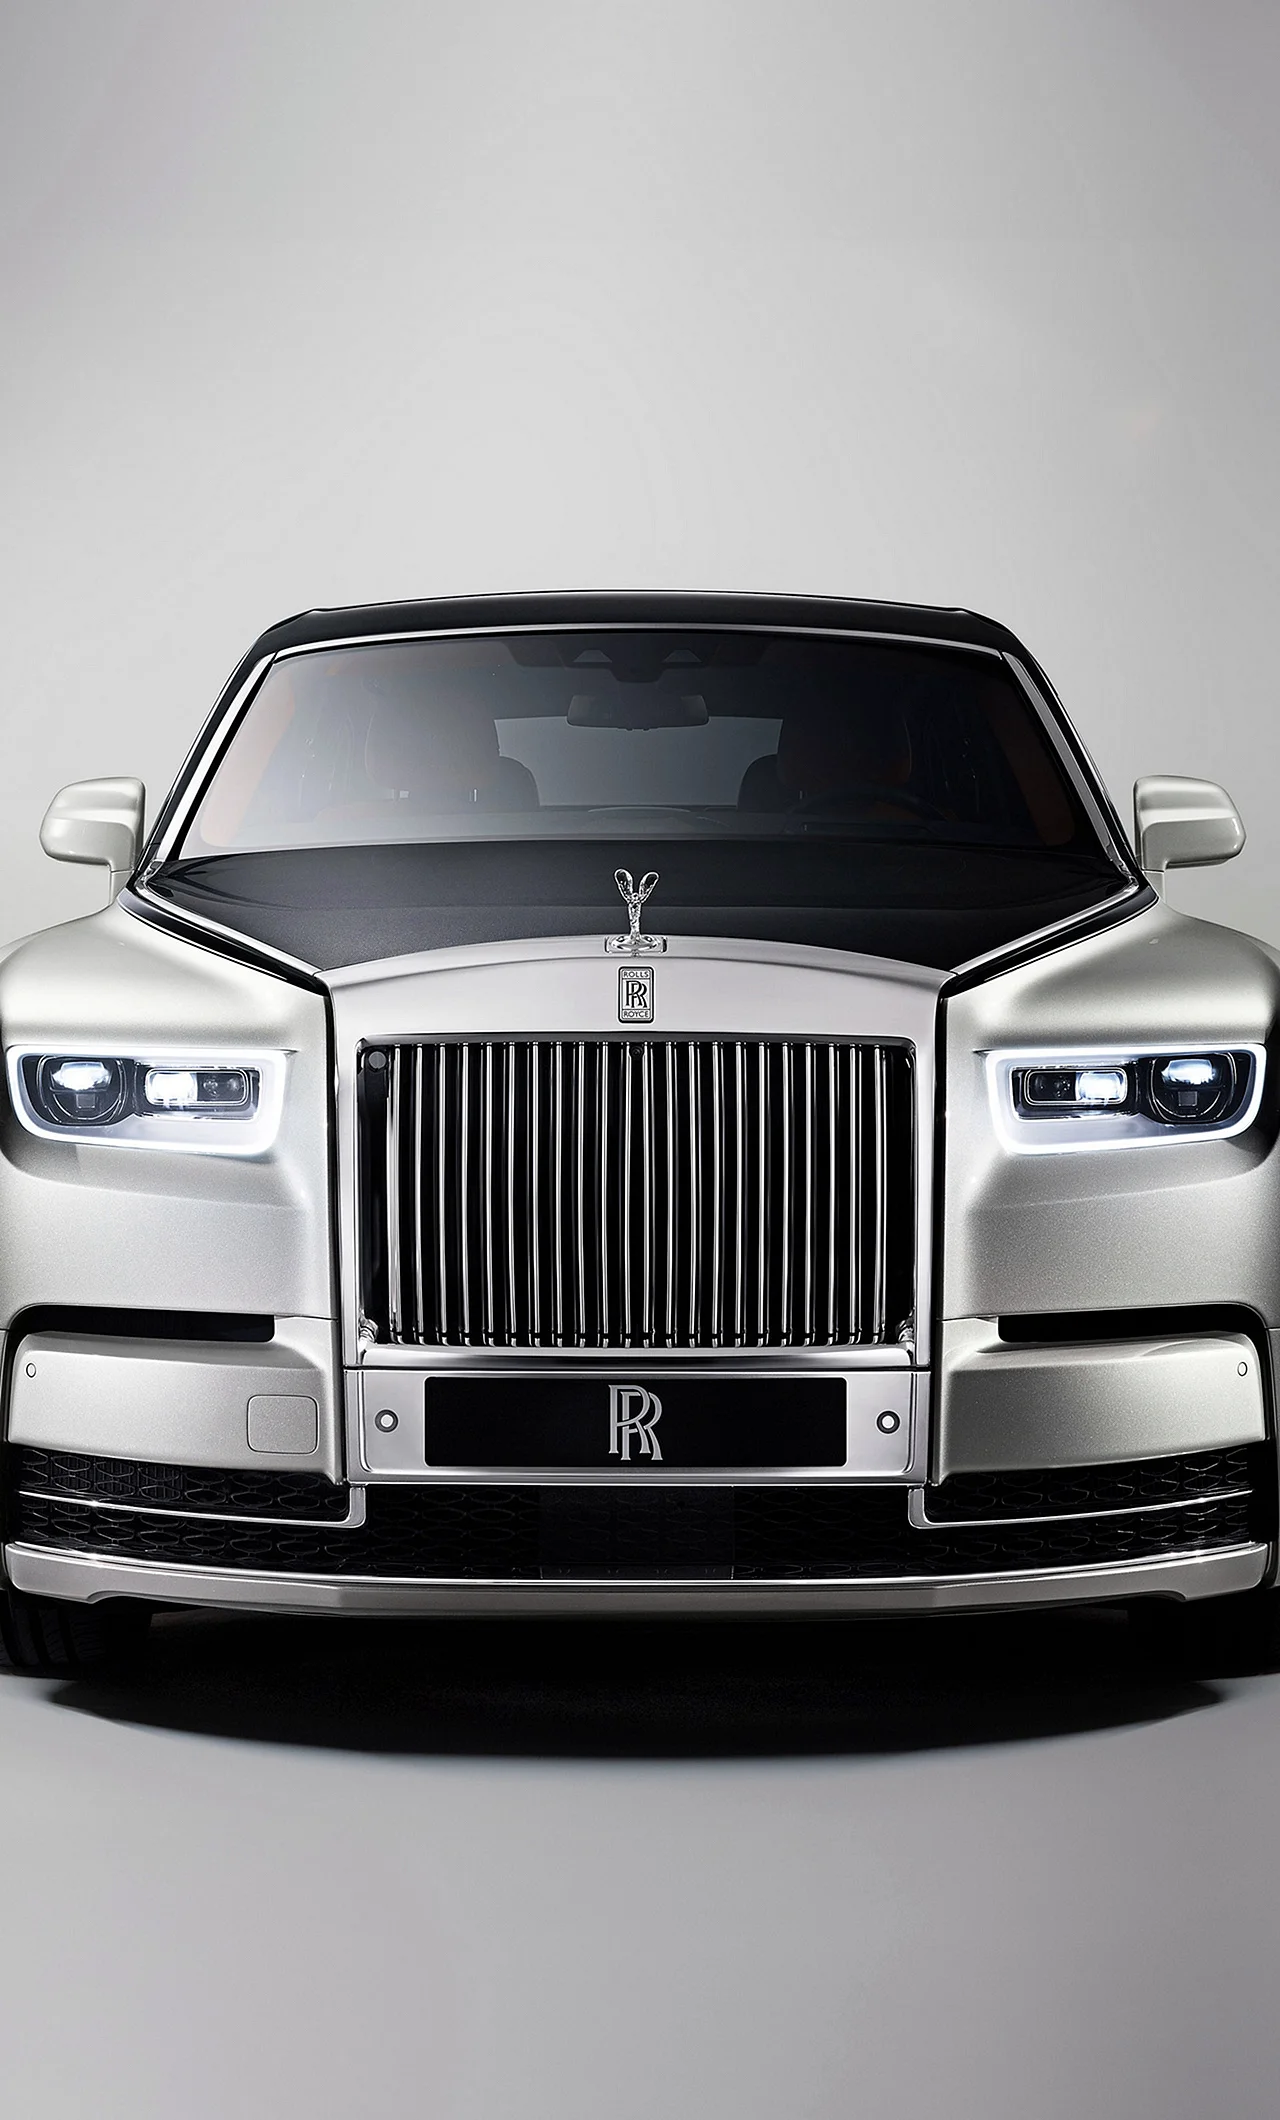 Rolls Royce Phantom 2017 Wallpaper For iPhone